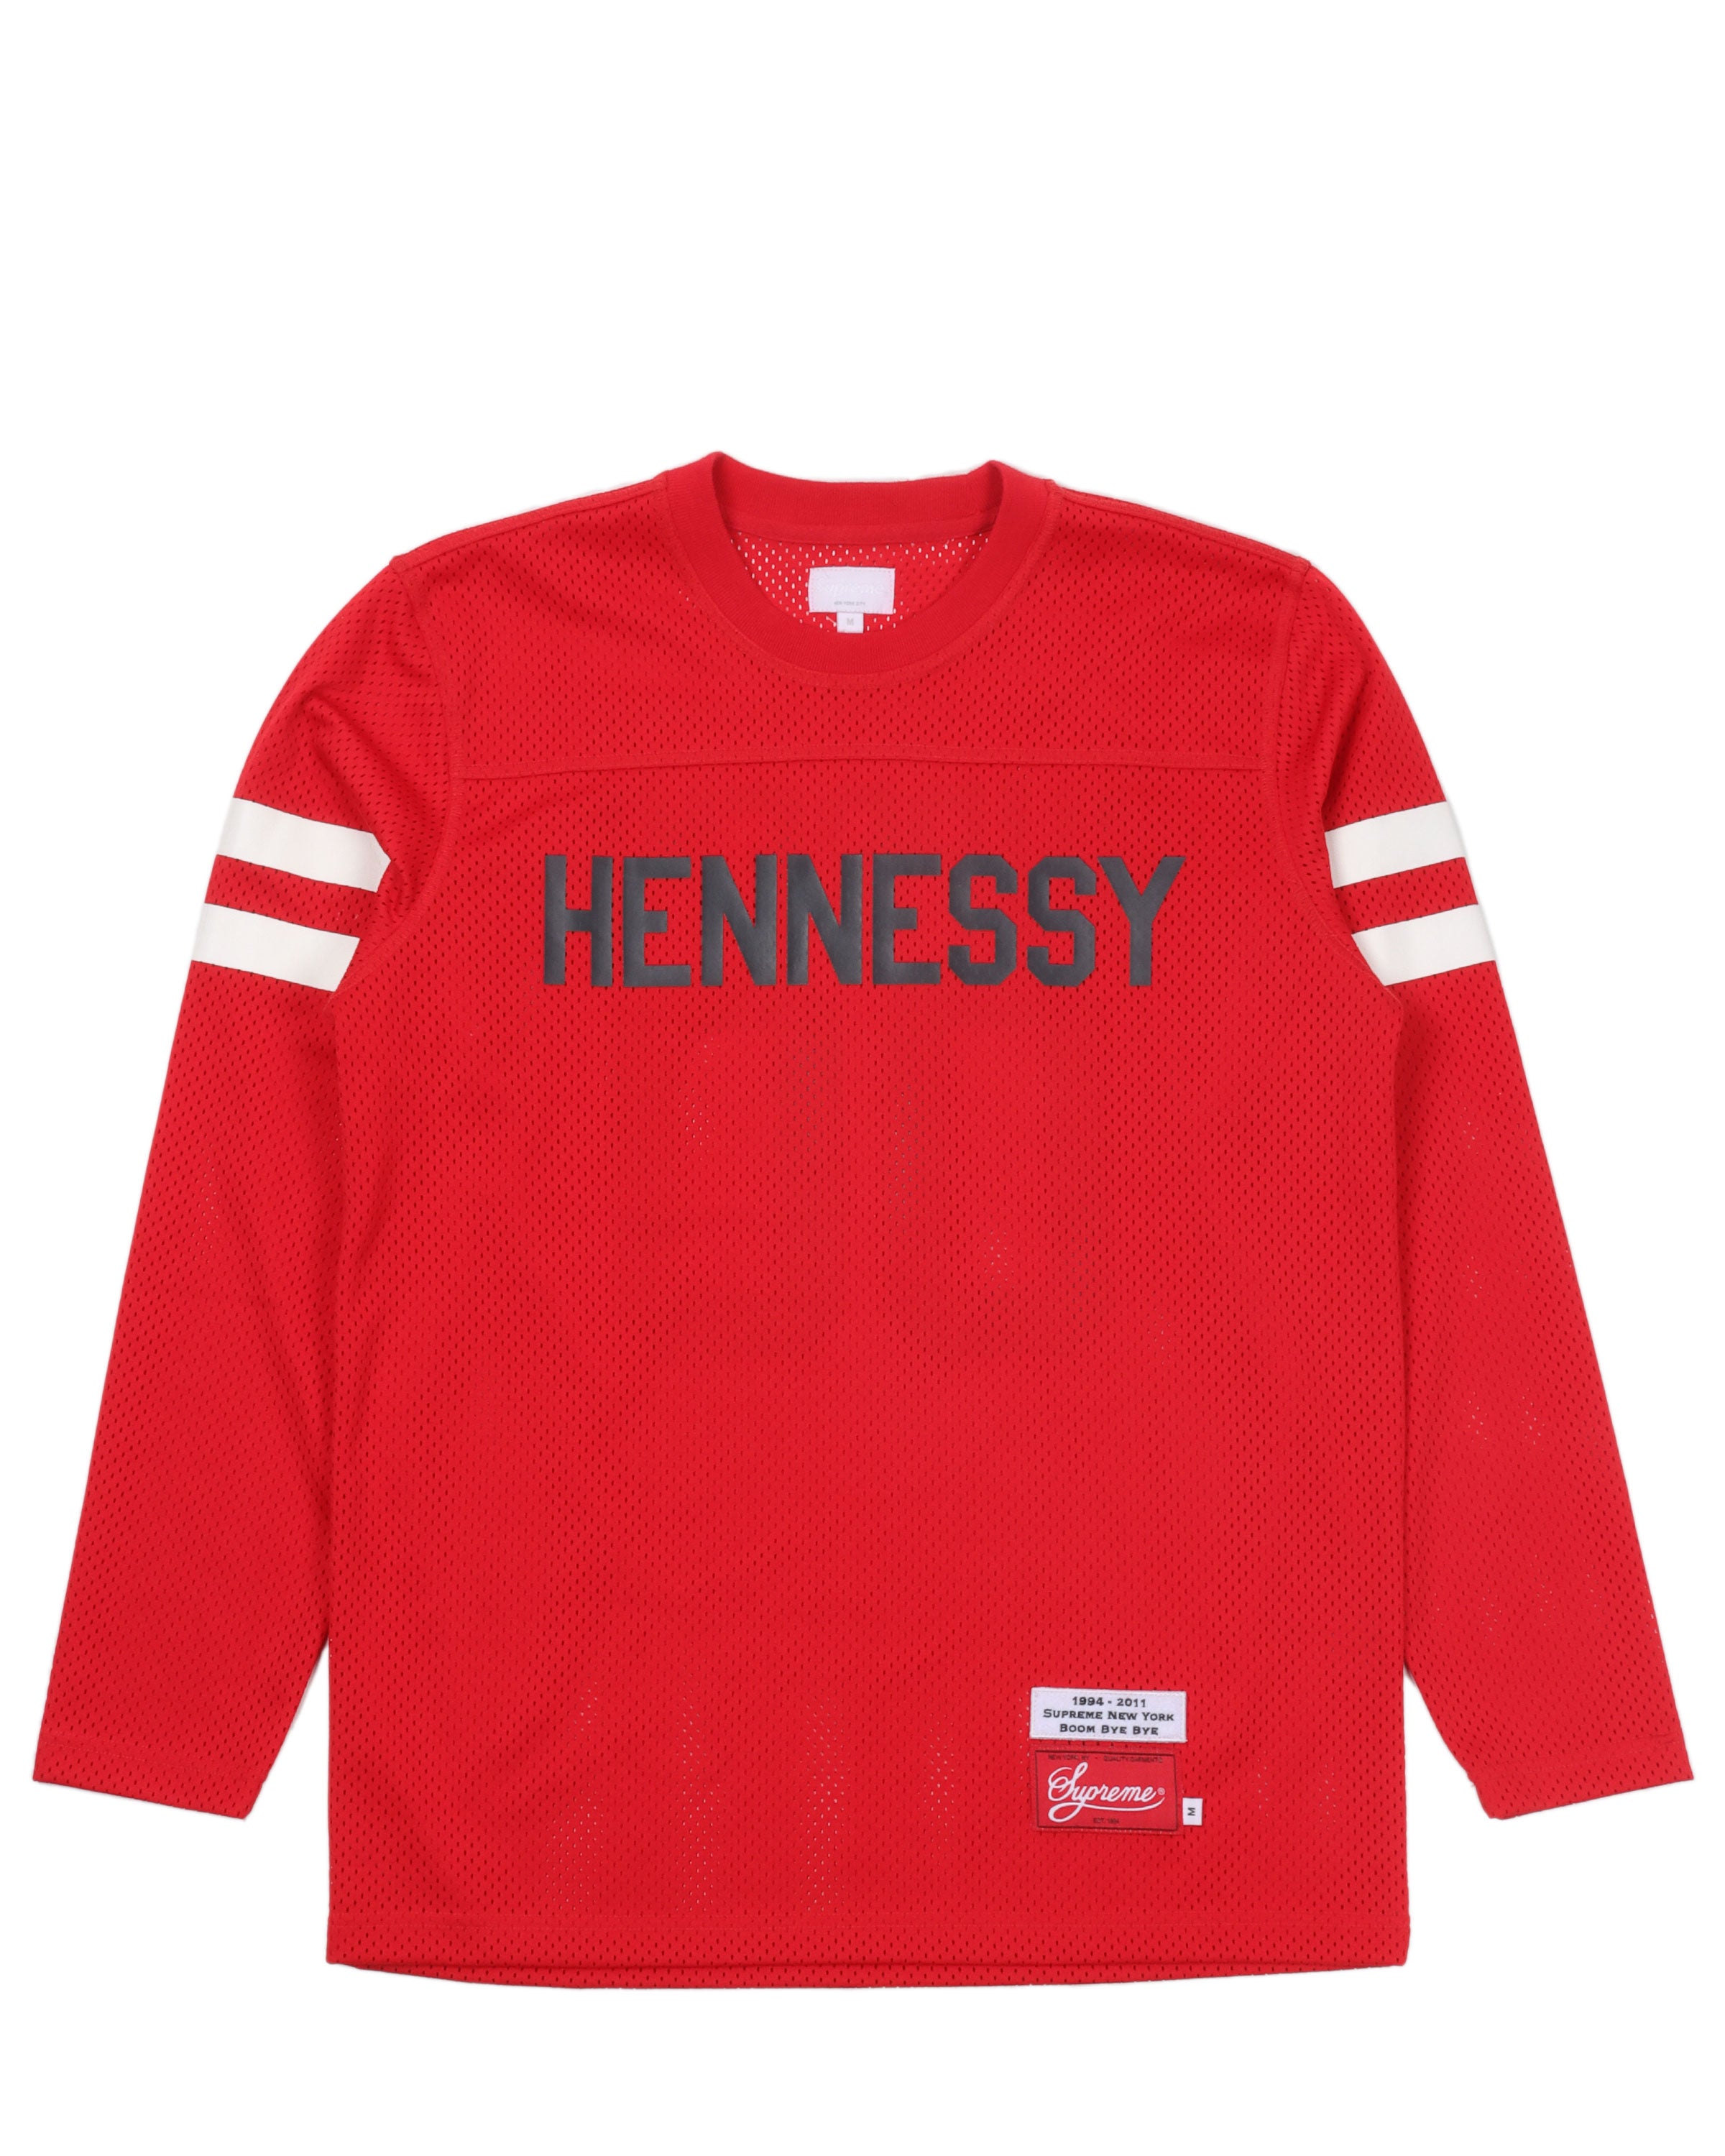 "Hennessy" Striped Jersey (2011)